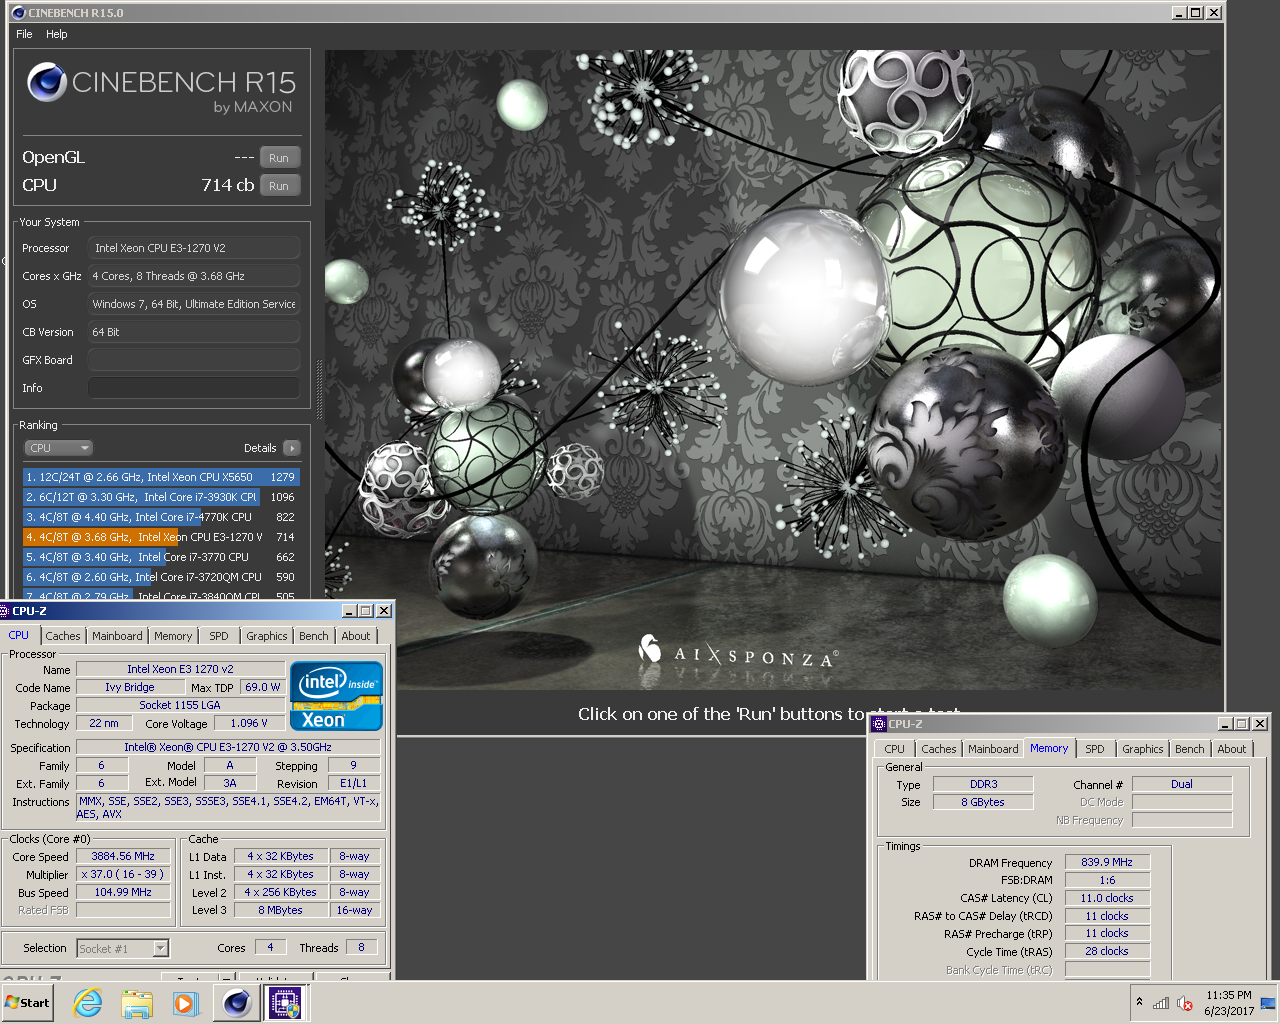 MrPaco`s Cinebench - R15 score: 714 cb with a Xeon E3 1270 v2